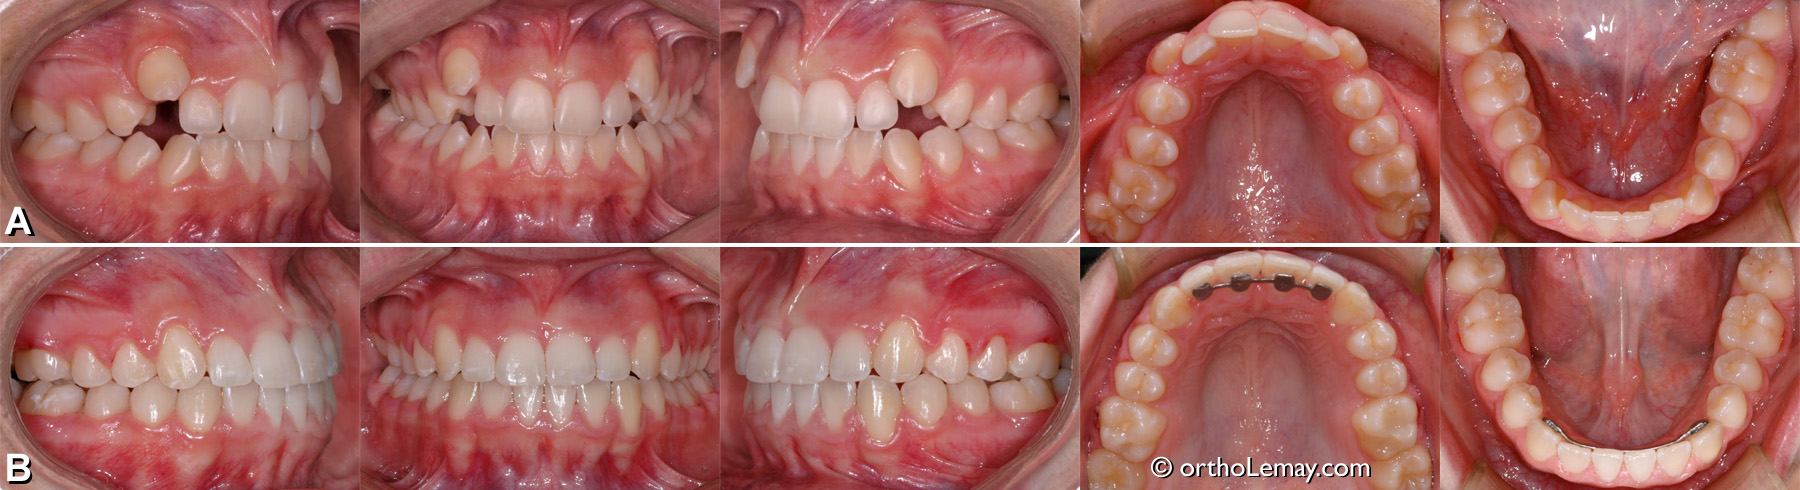 malocclusion dentaire CL1 arcade étroite canine ectopique traitement orthodontie Sherbrooke MPL13f 123204